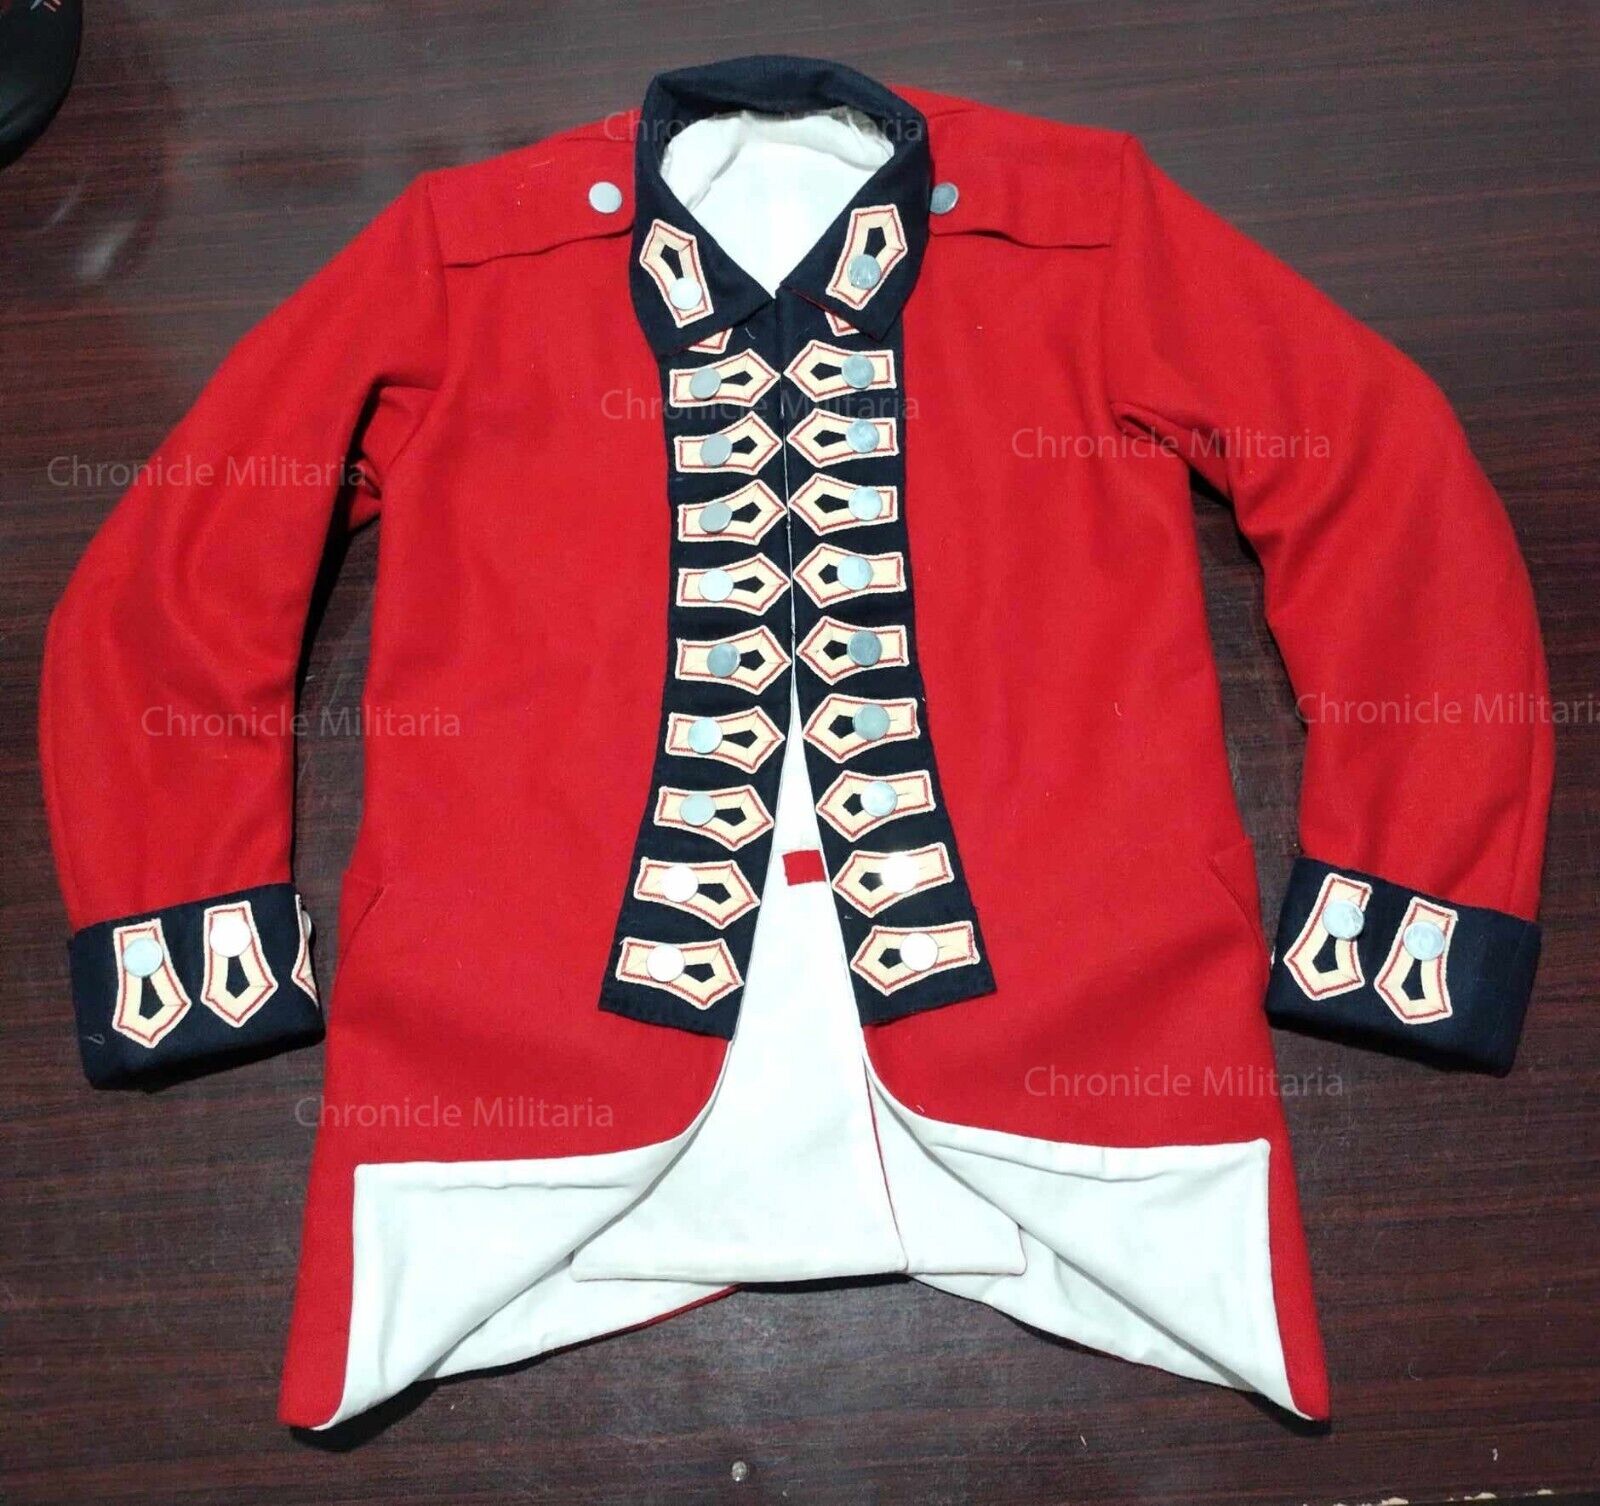 42nd Royal Highlander coat, revolutionary war coat